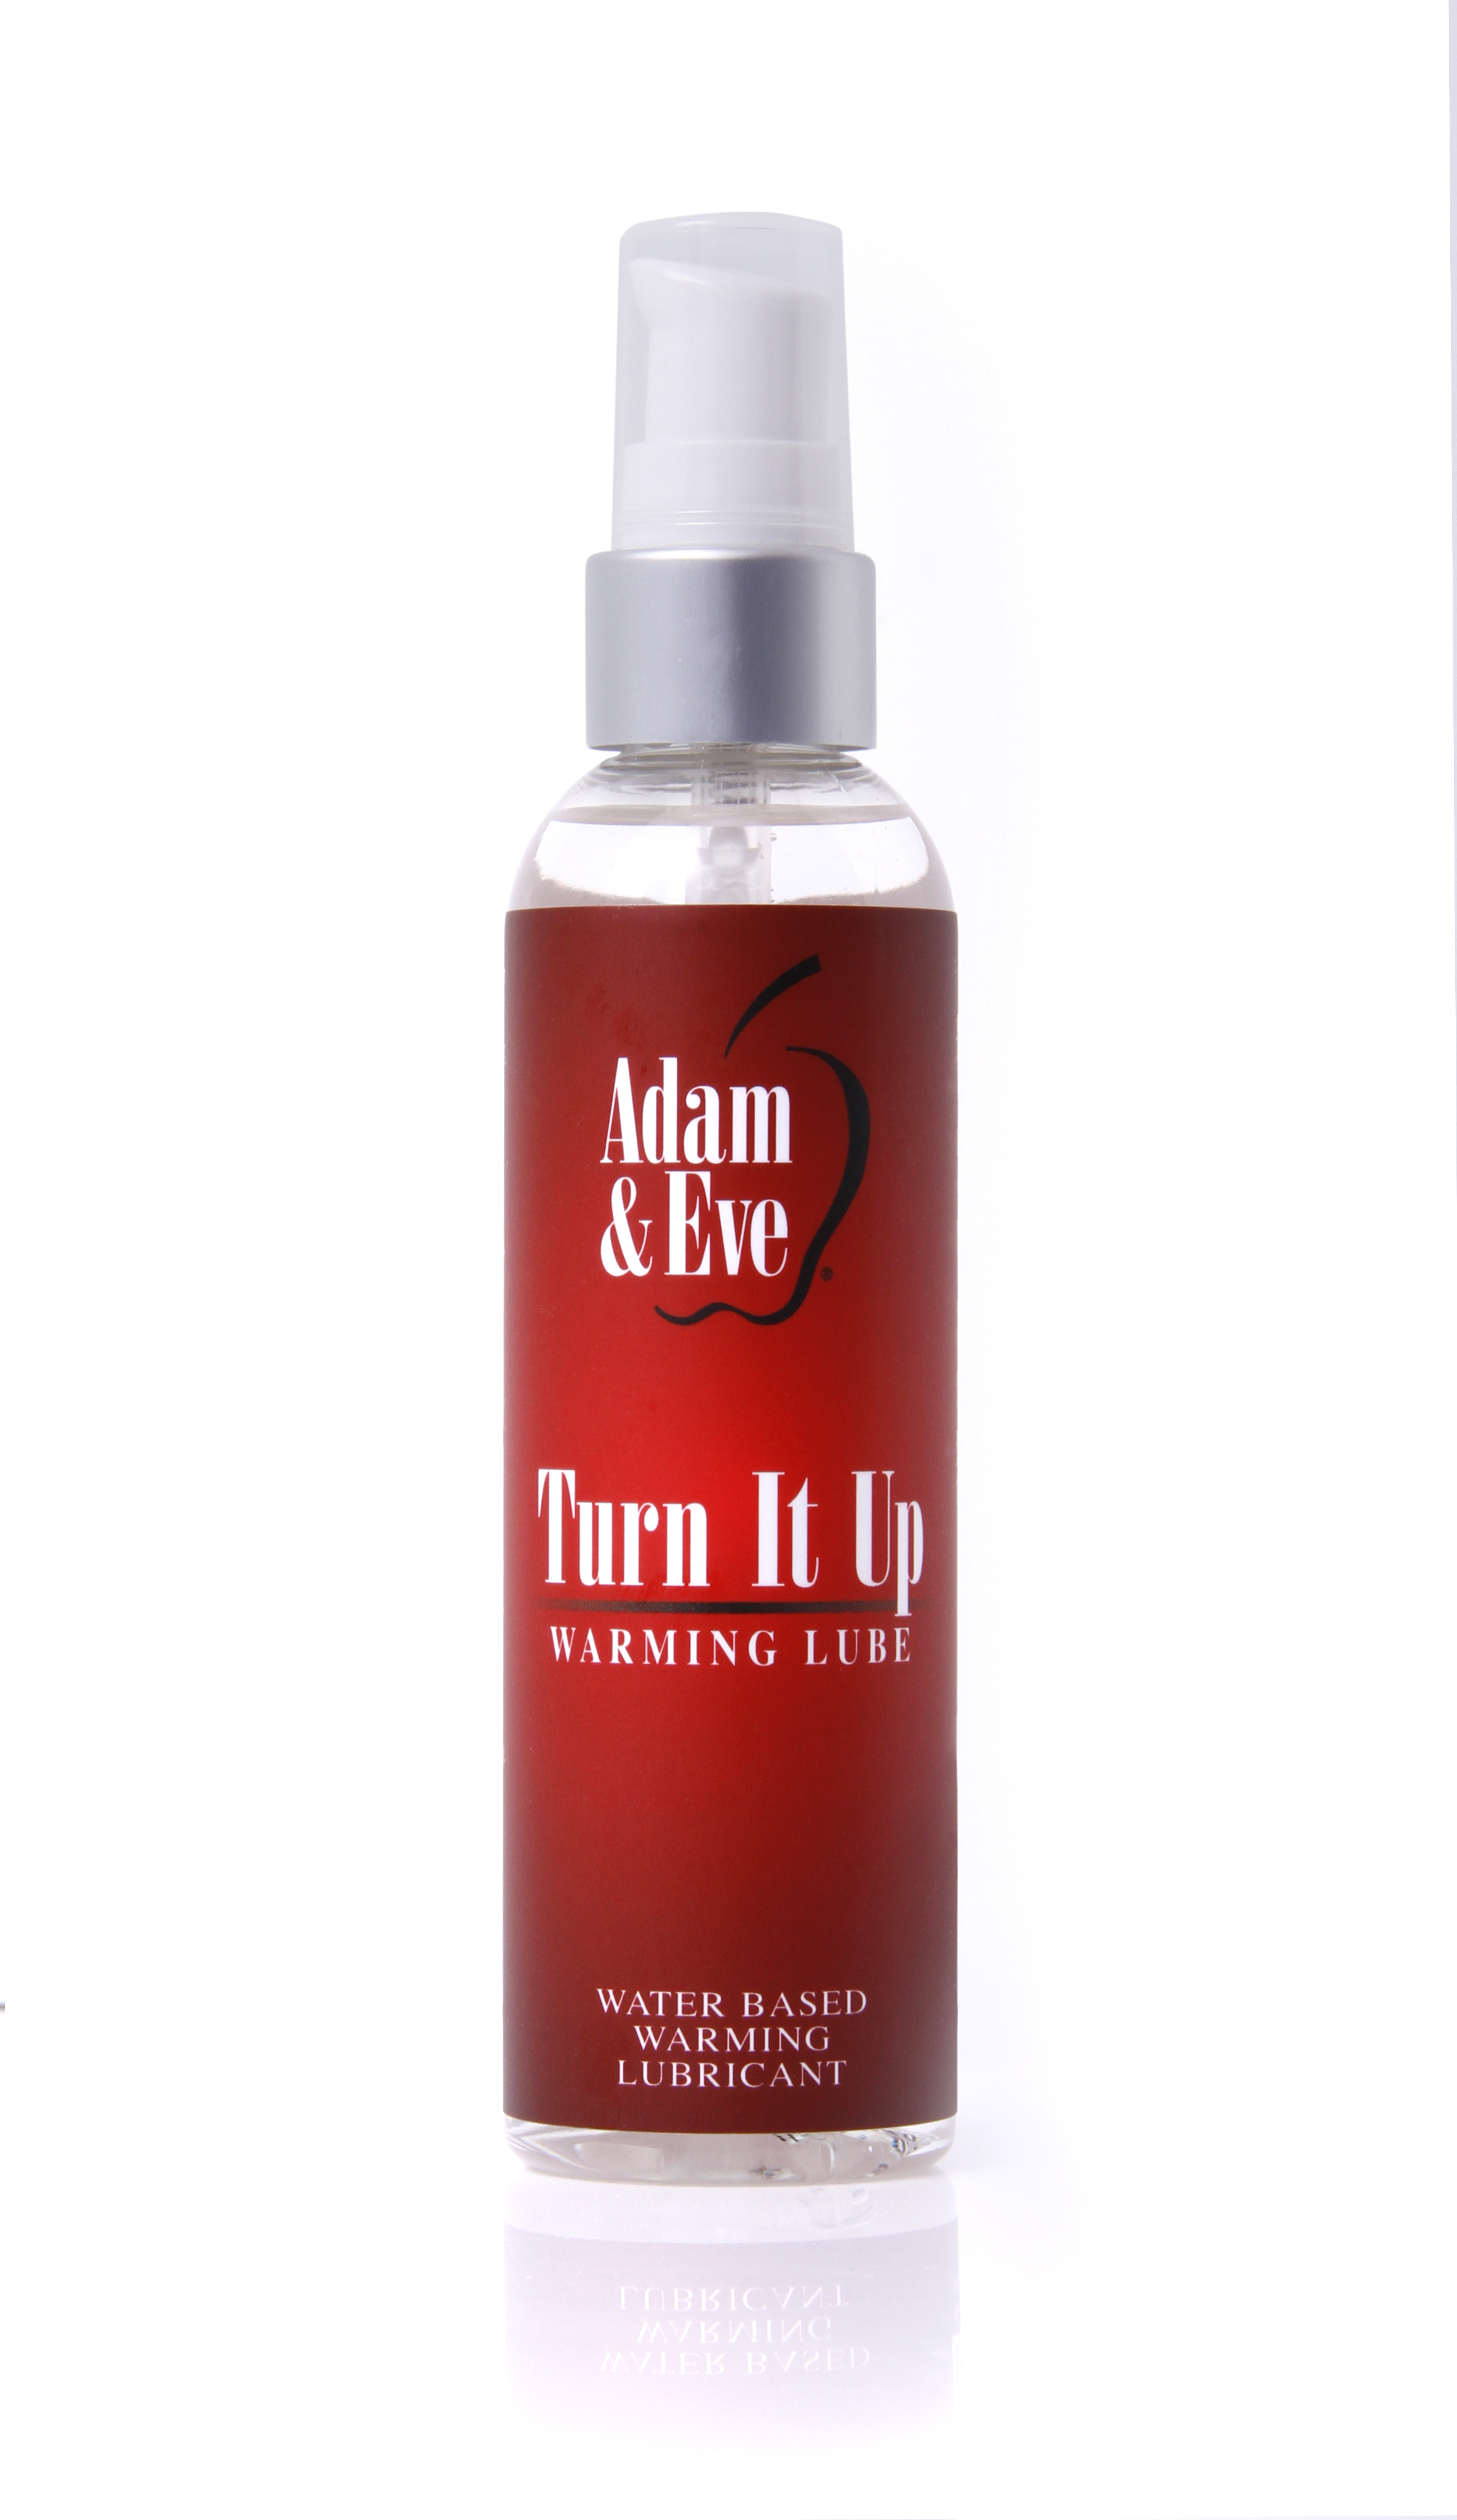 ADAM & EVE TURN IT UP WARMING LUBE 4OZ  